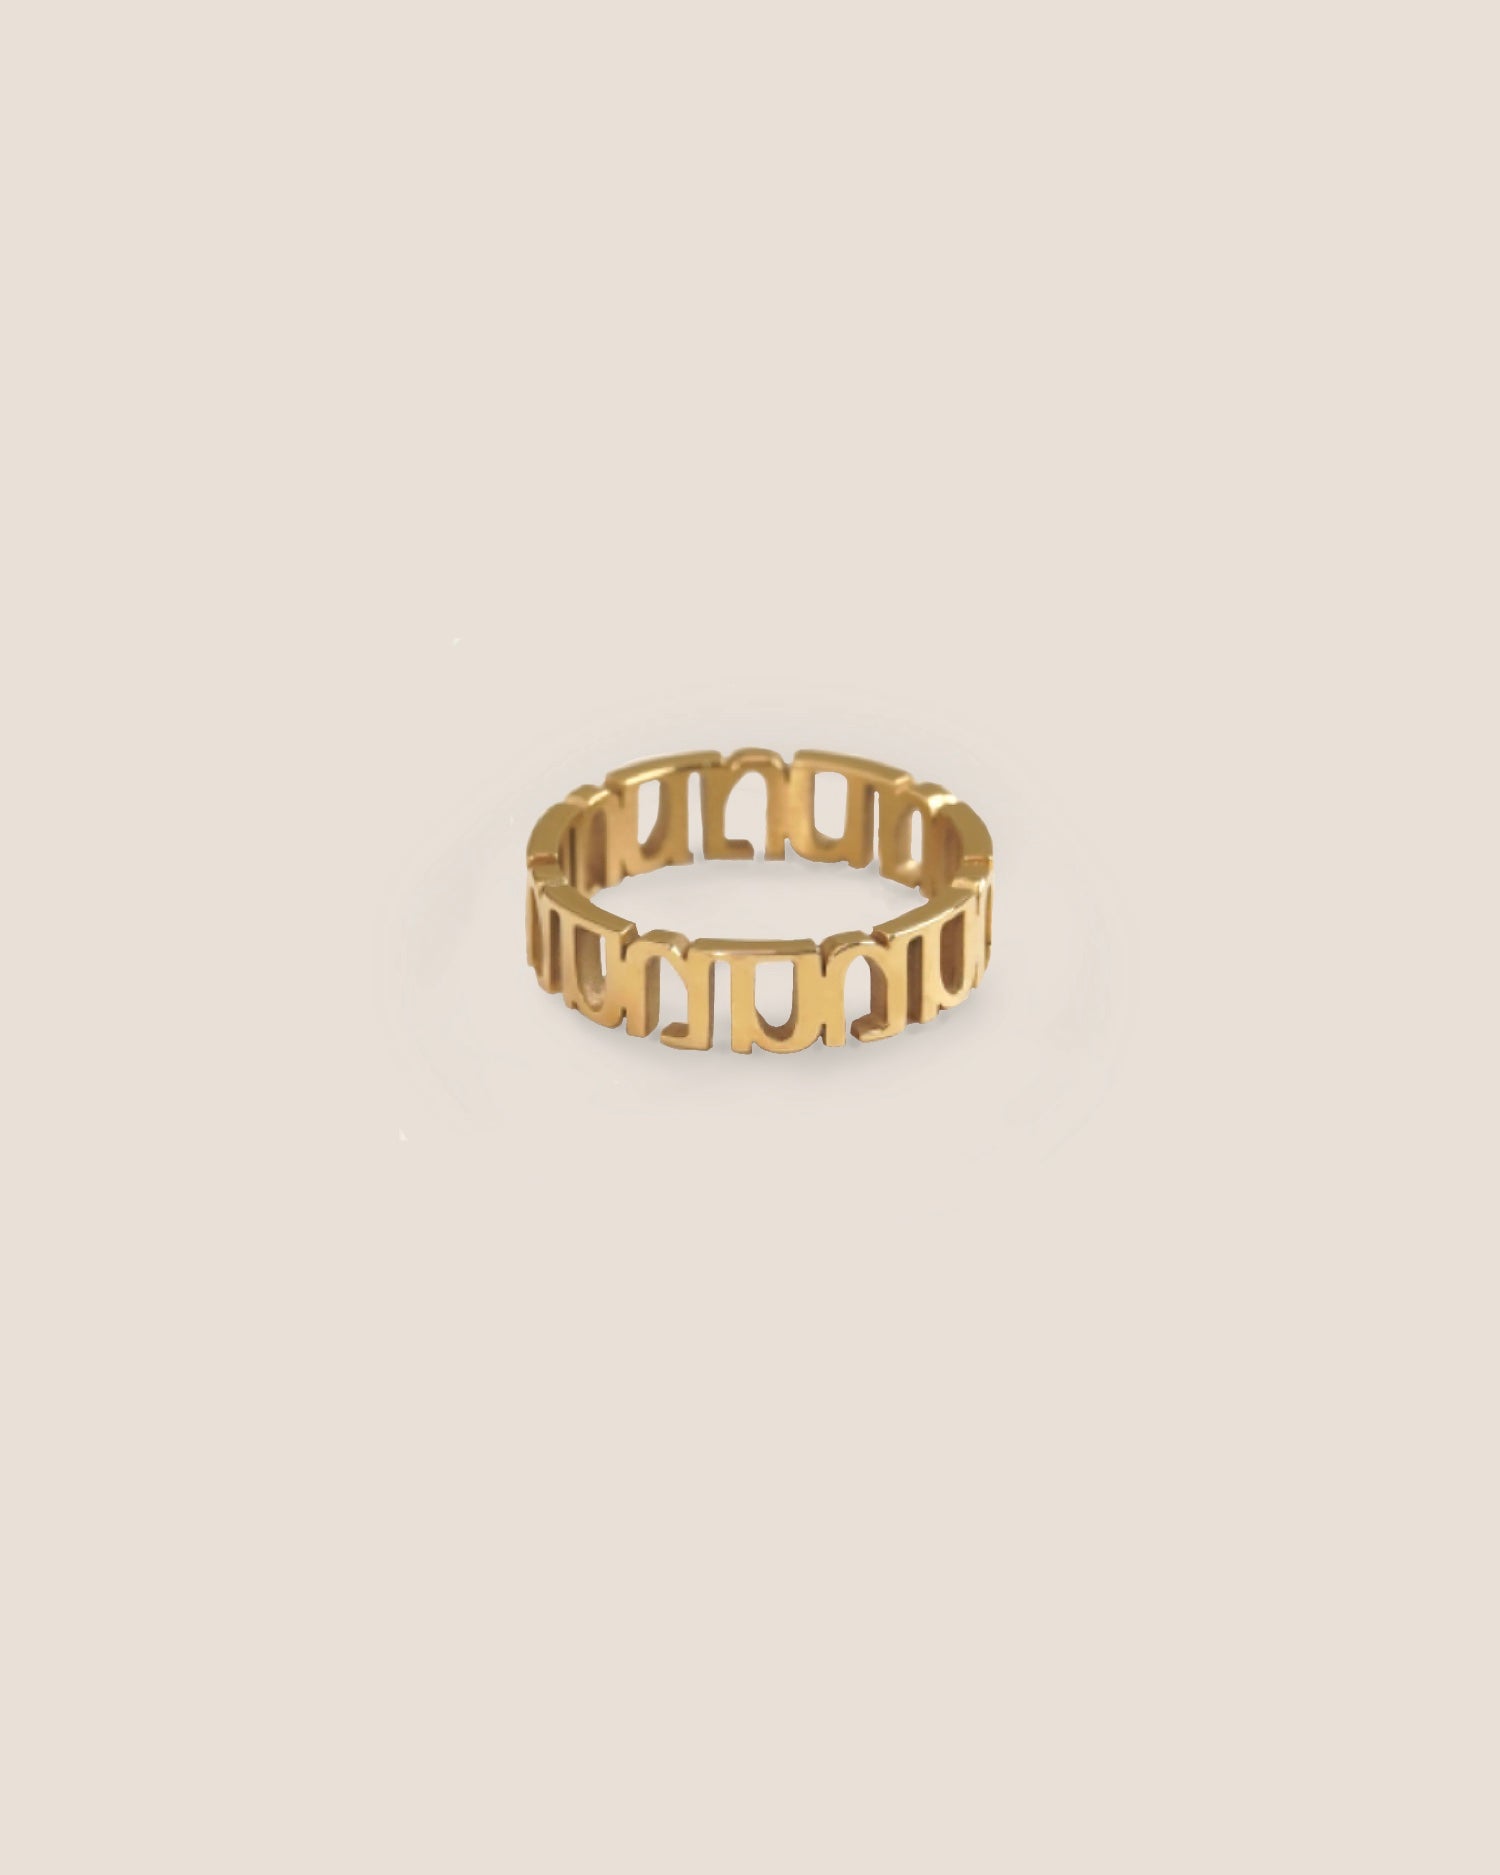 Gung Iconic Gold Ring